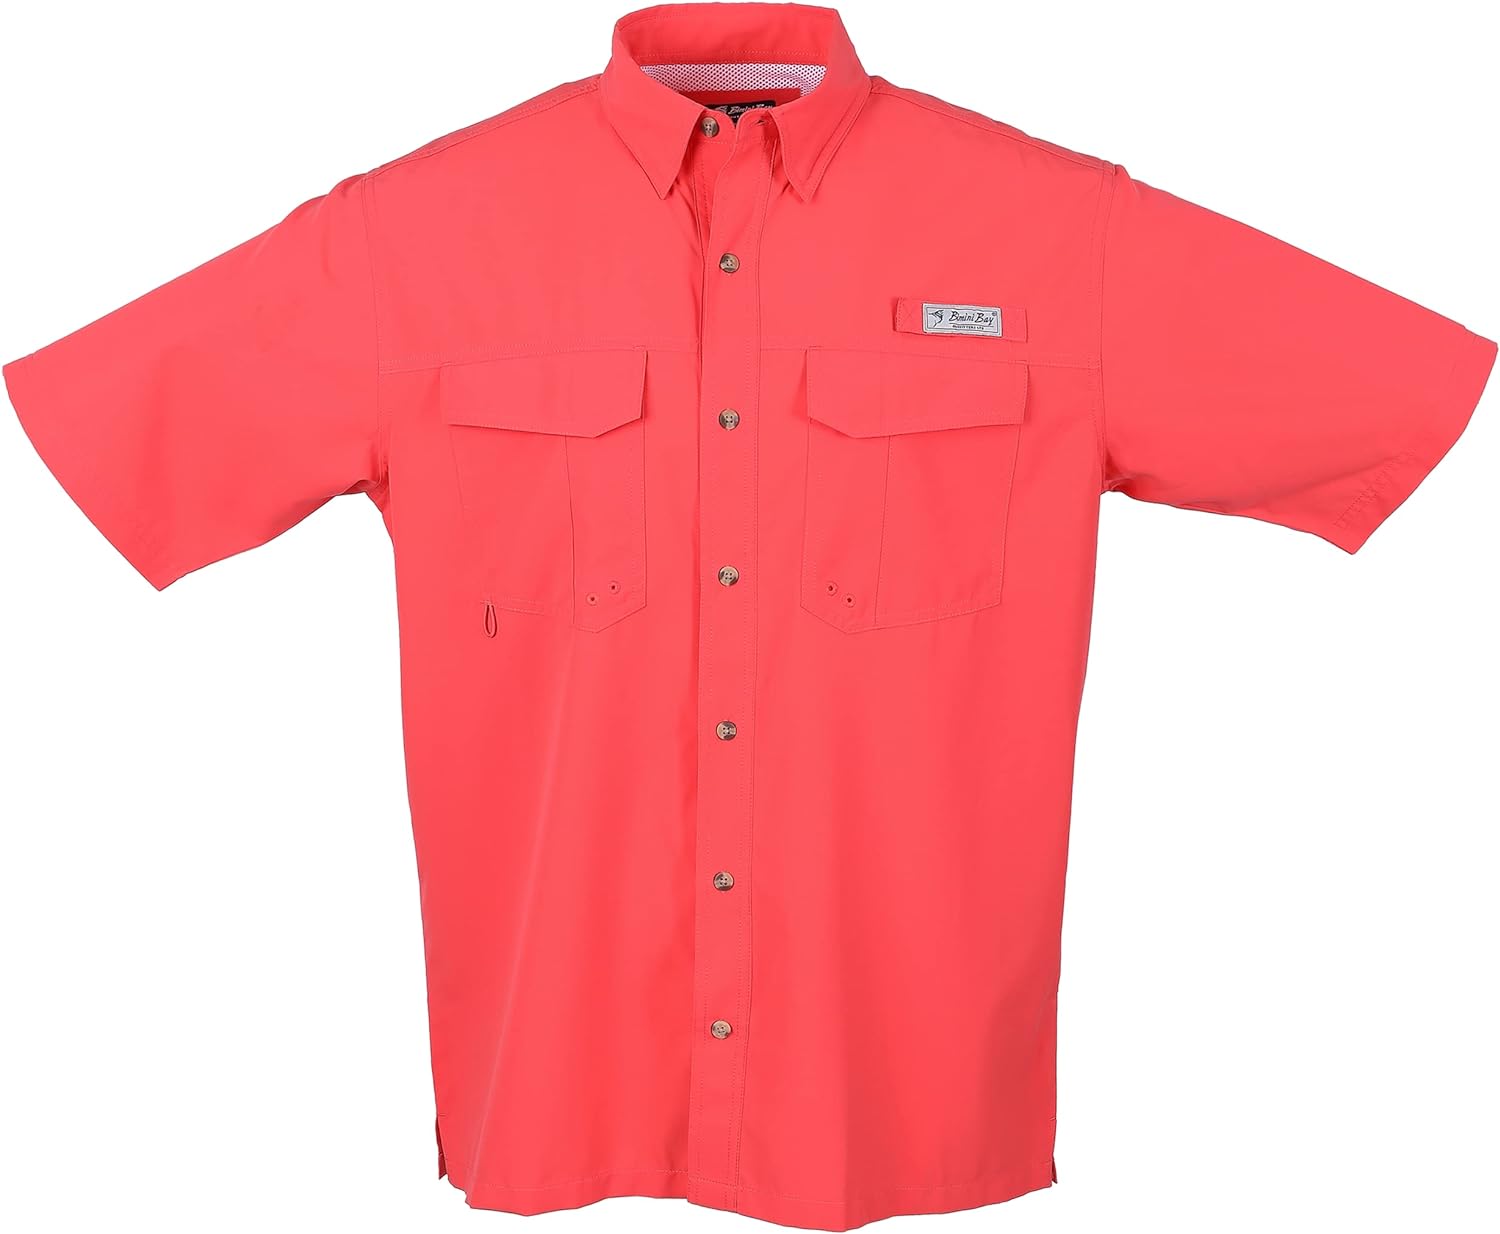 Key West Men's Short Sleeve Shirt Featuring BloodGuard Plus